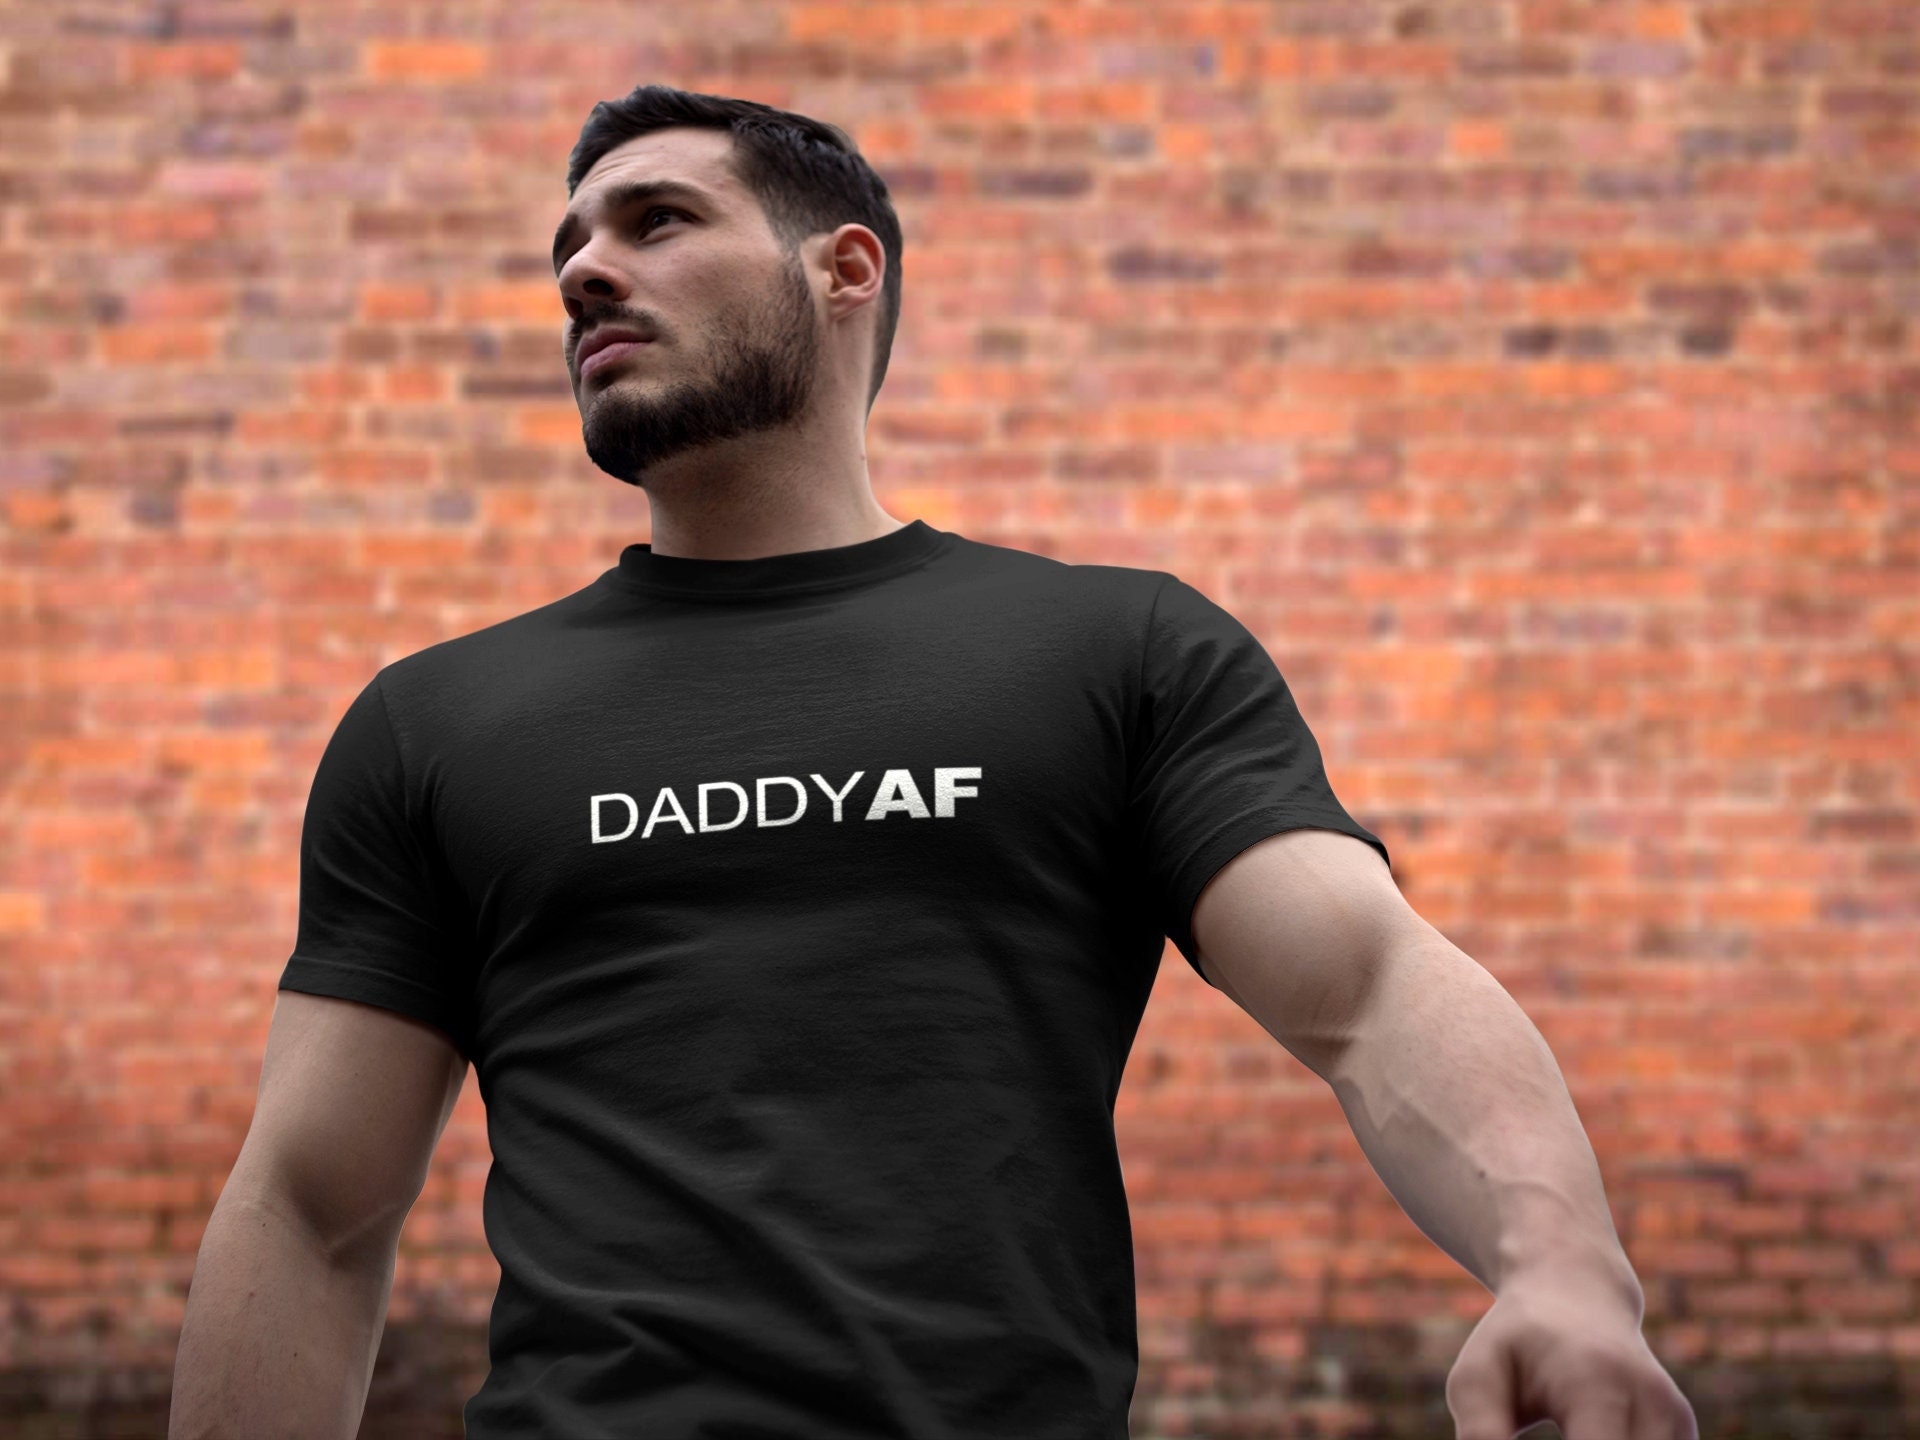 Daddy gay men